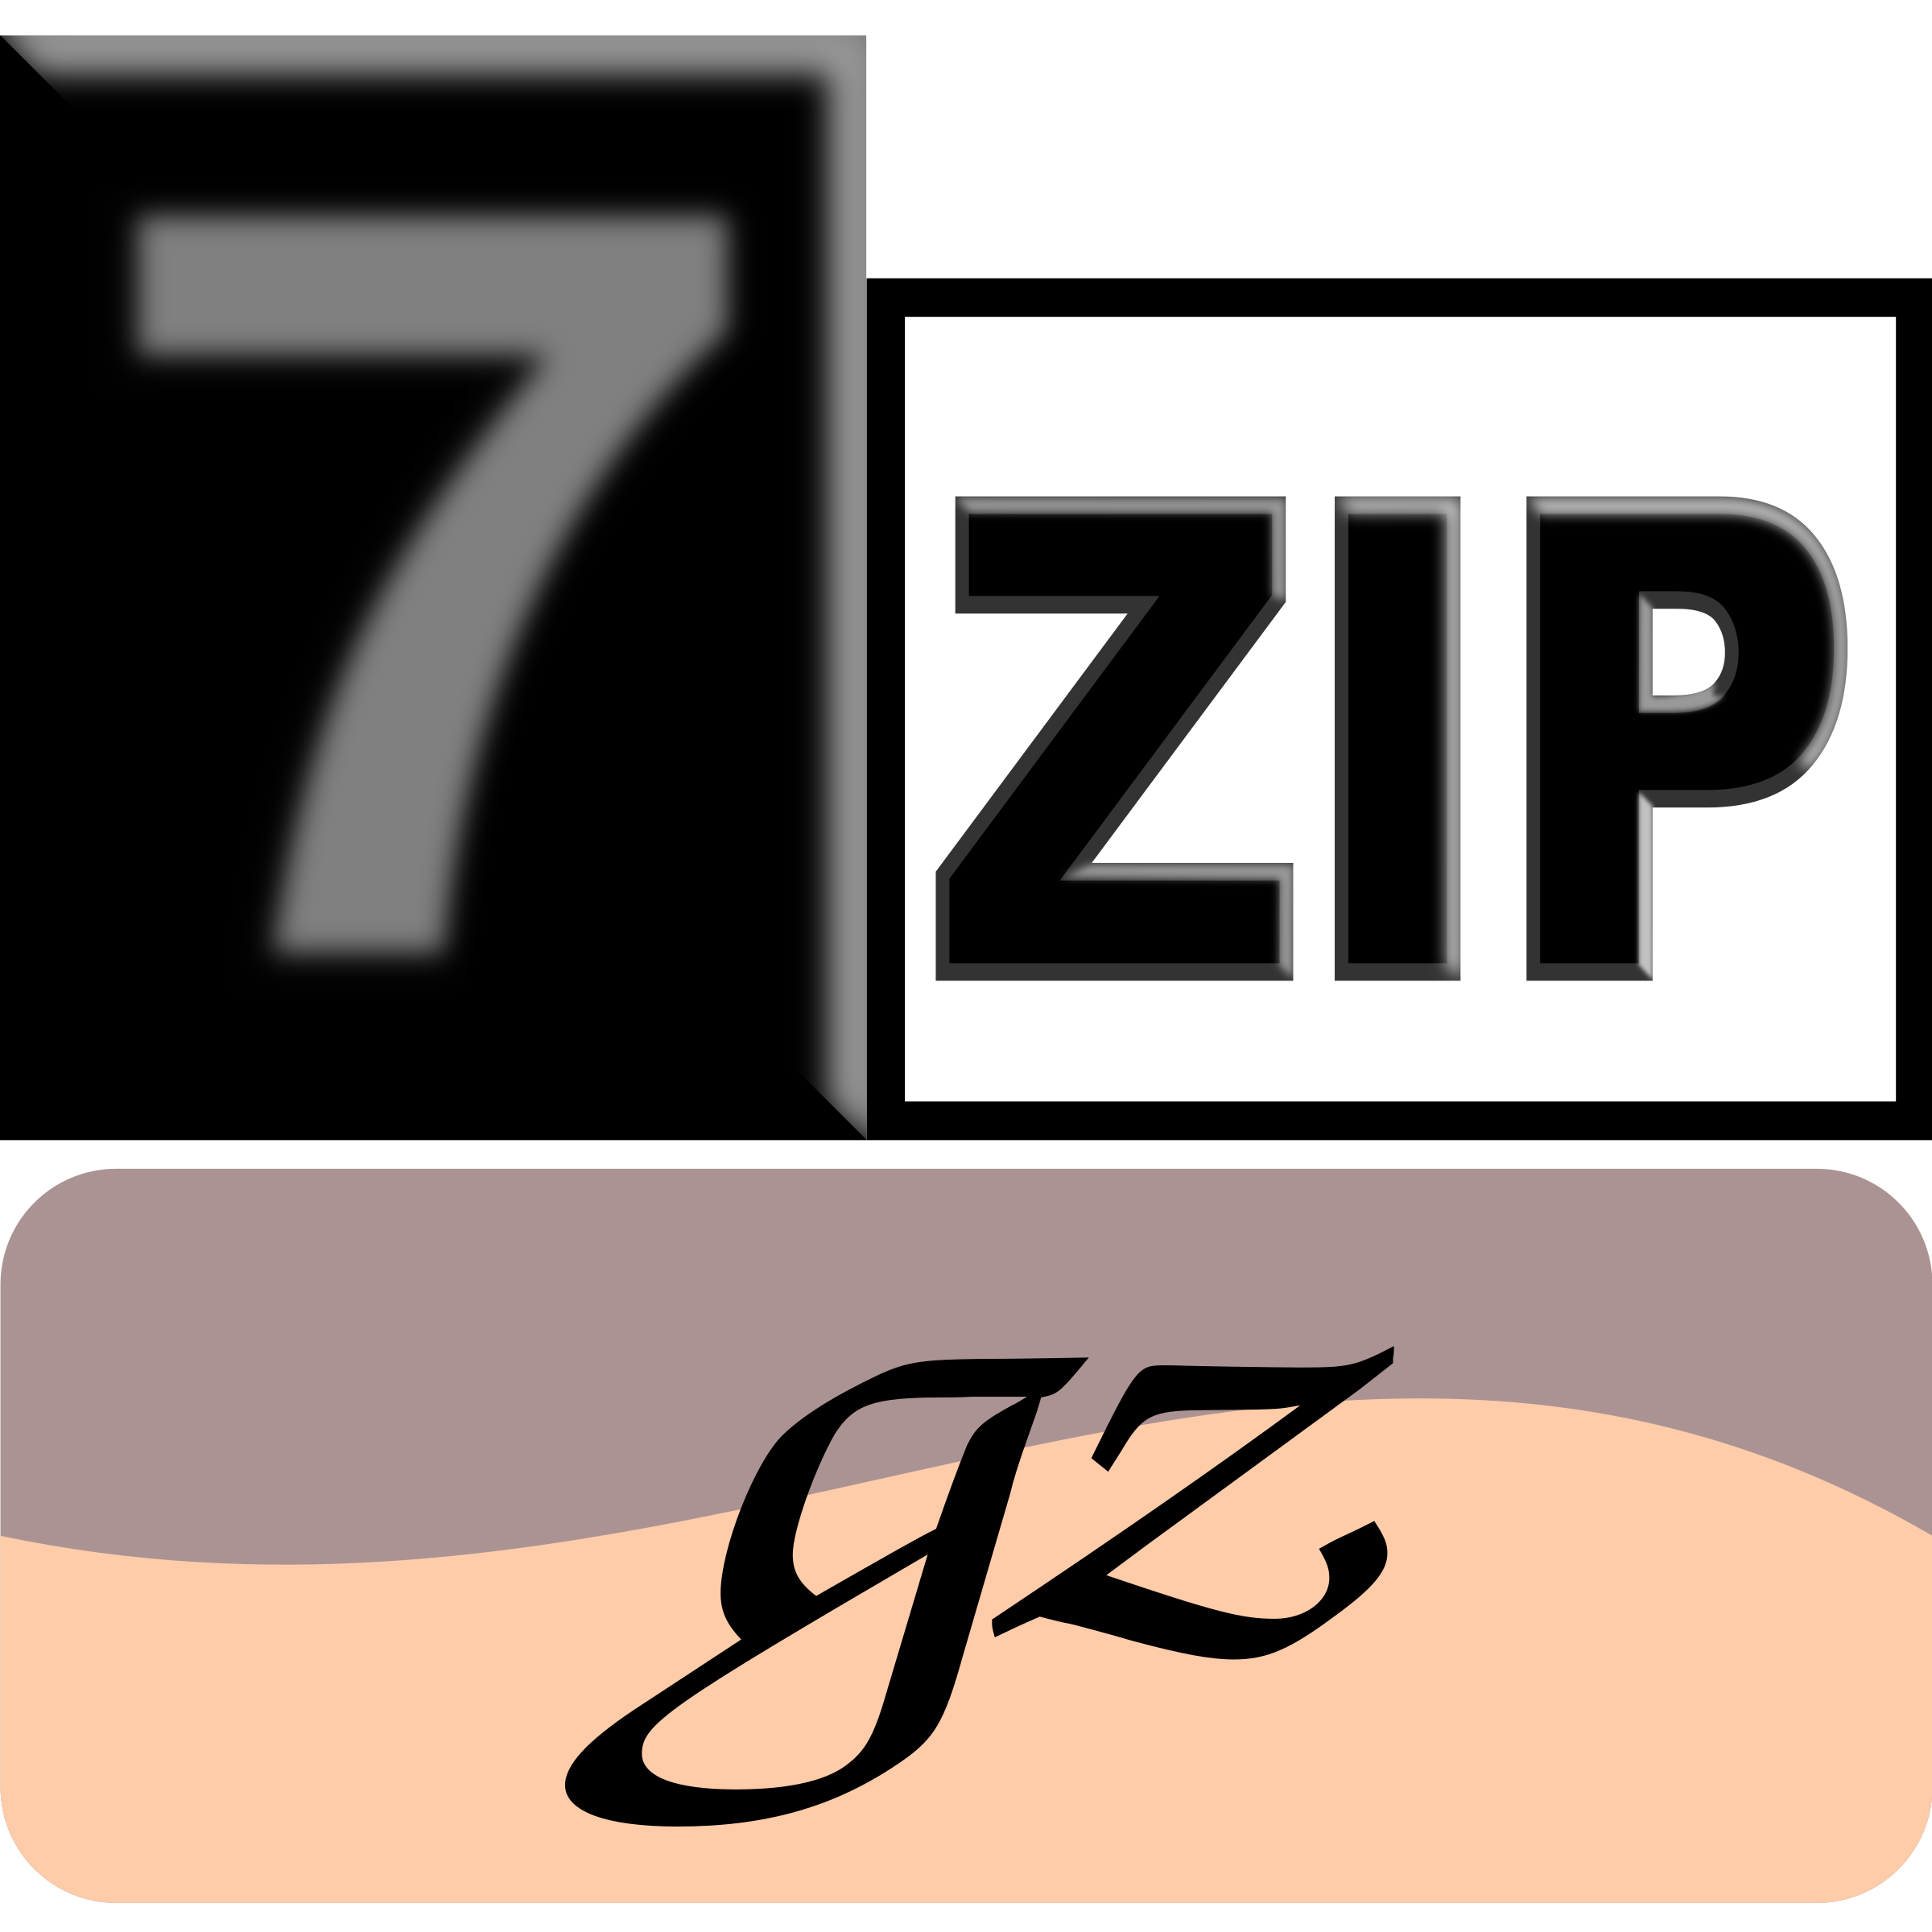 7zipClassic-gz Clip arts